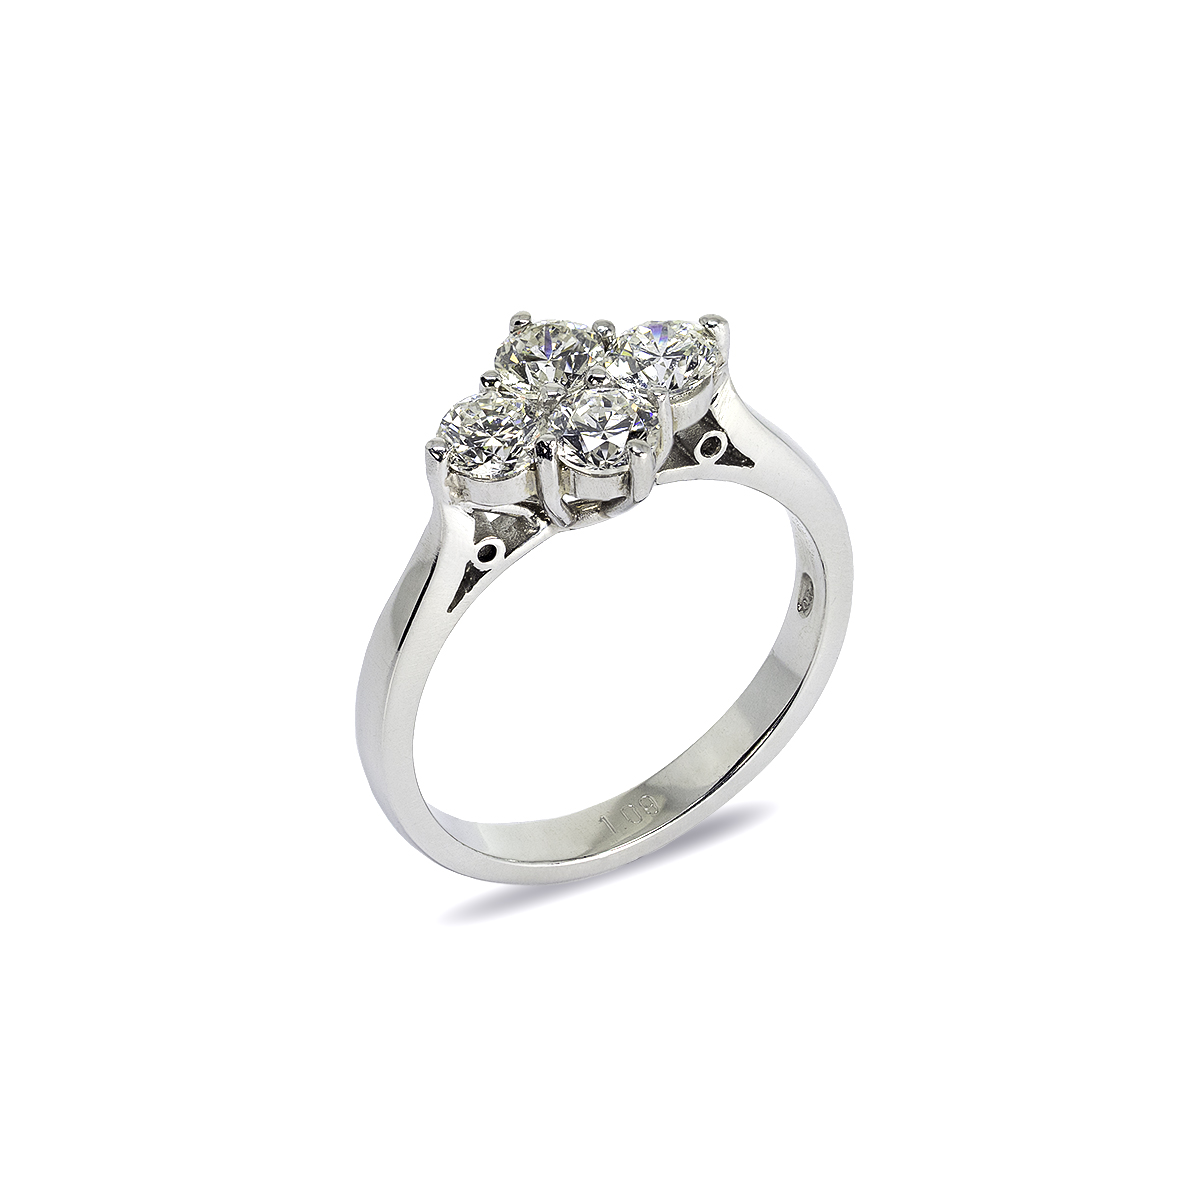 Vogue - Platinum 4-Stone Cluster Diamond Engagement Ring - 0.47cts